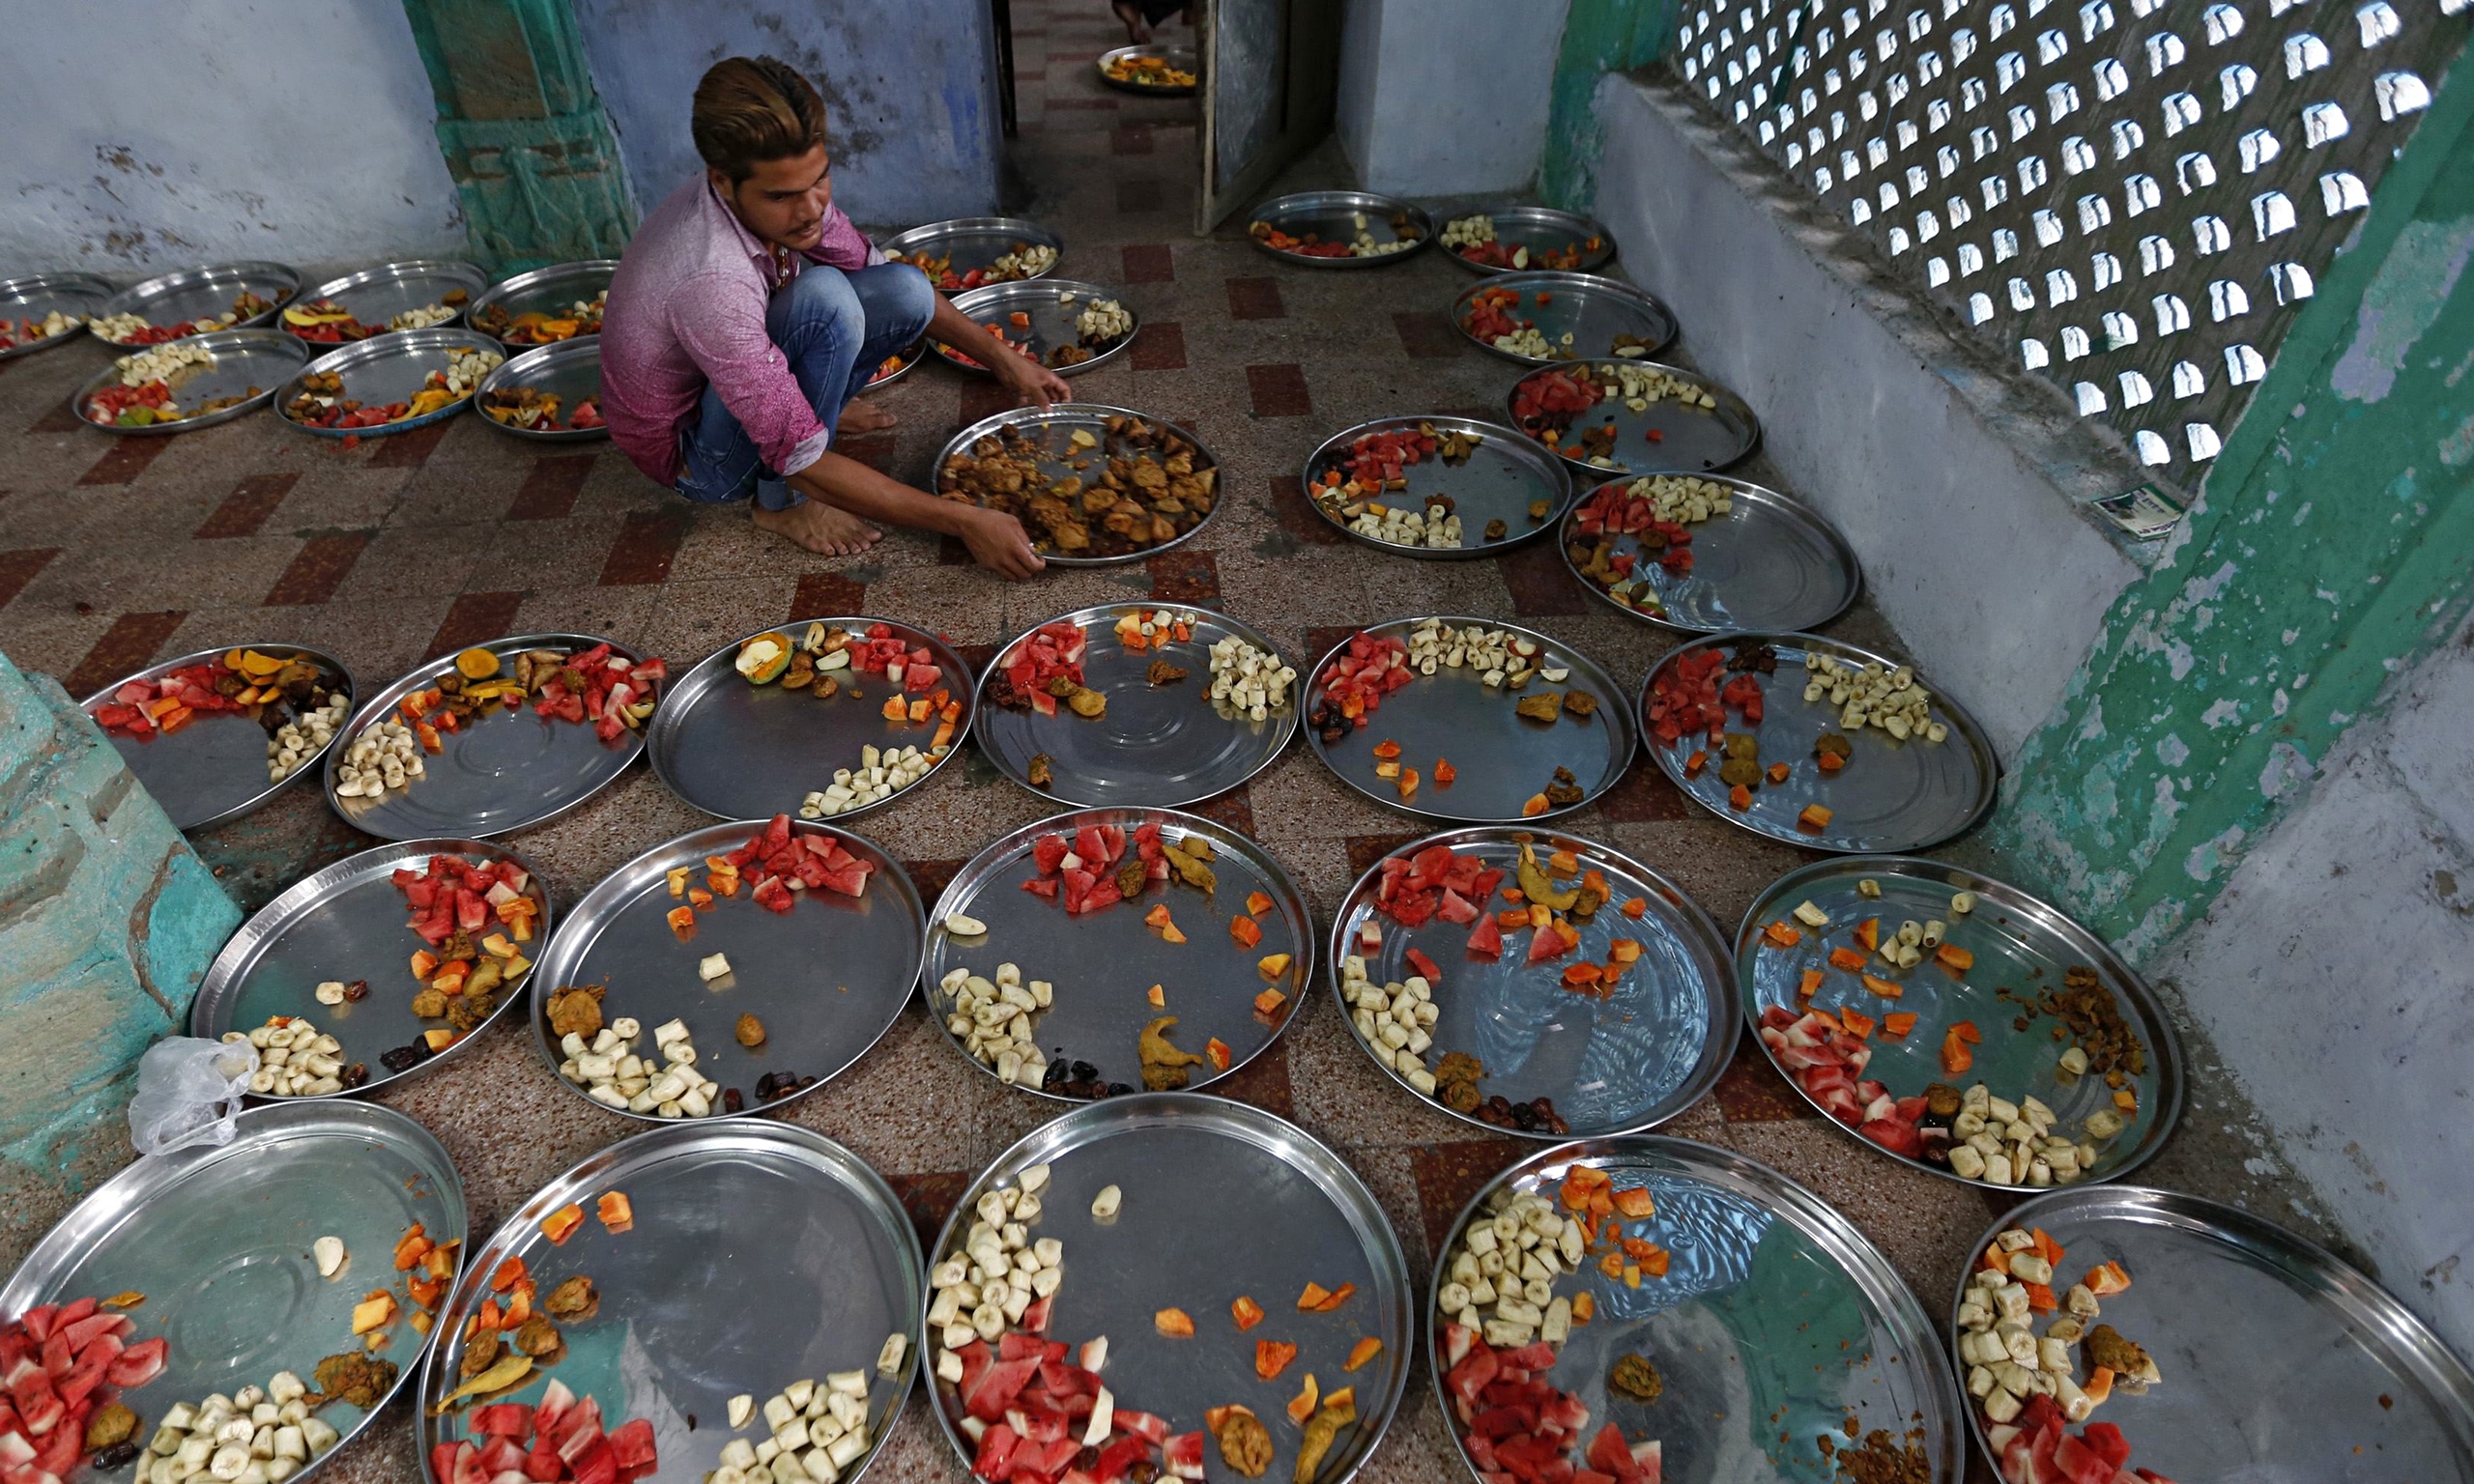 Uproar Over Hindu Nationalist Mp Force Feeding Muslim During Ramadan 